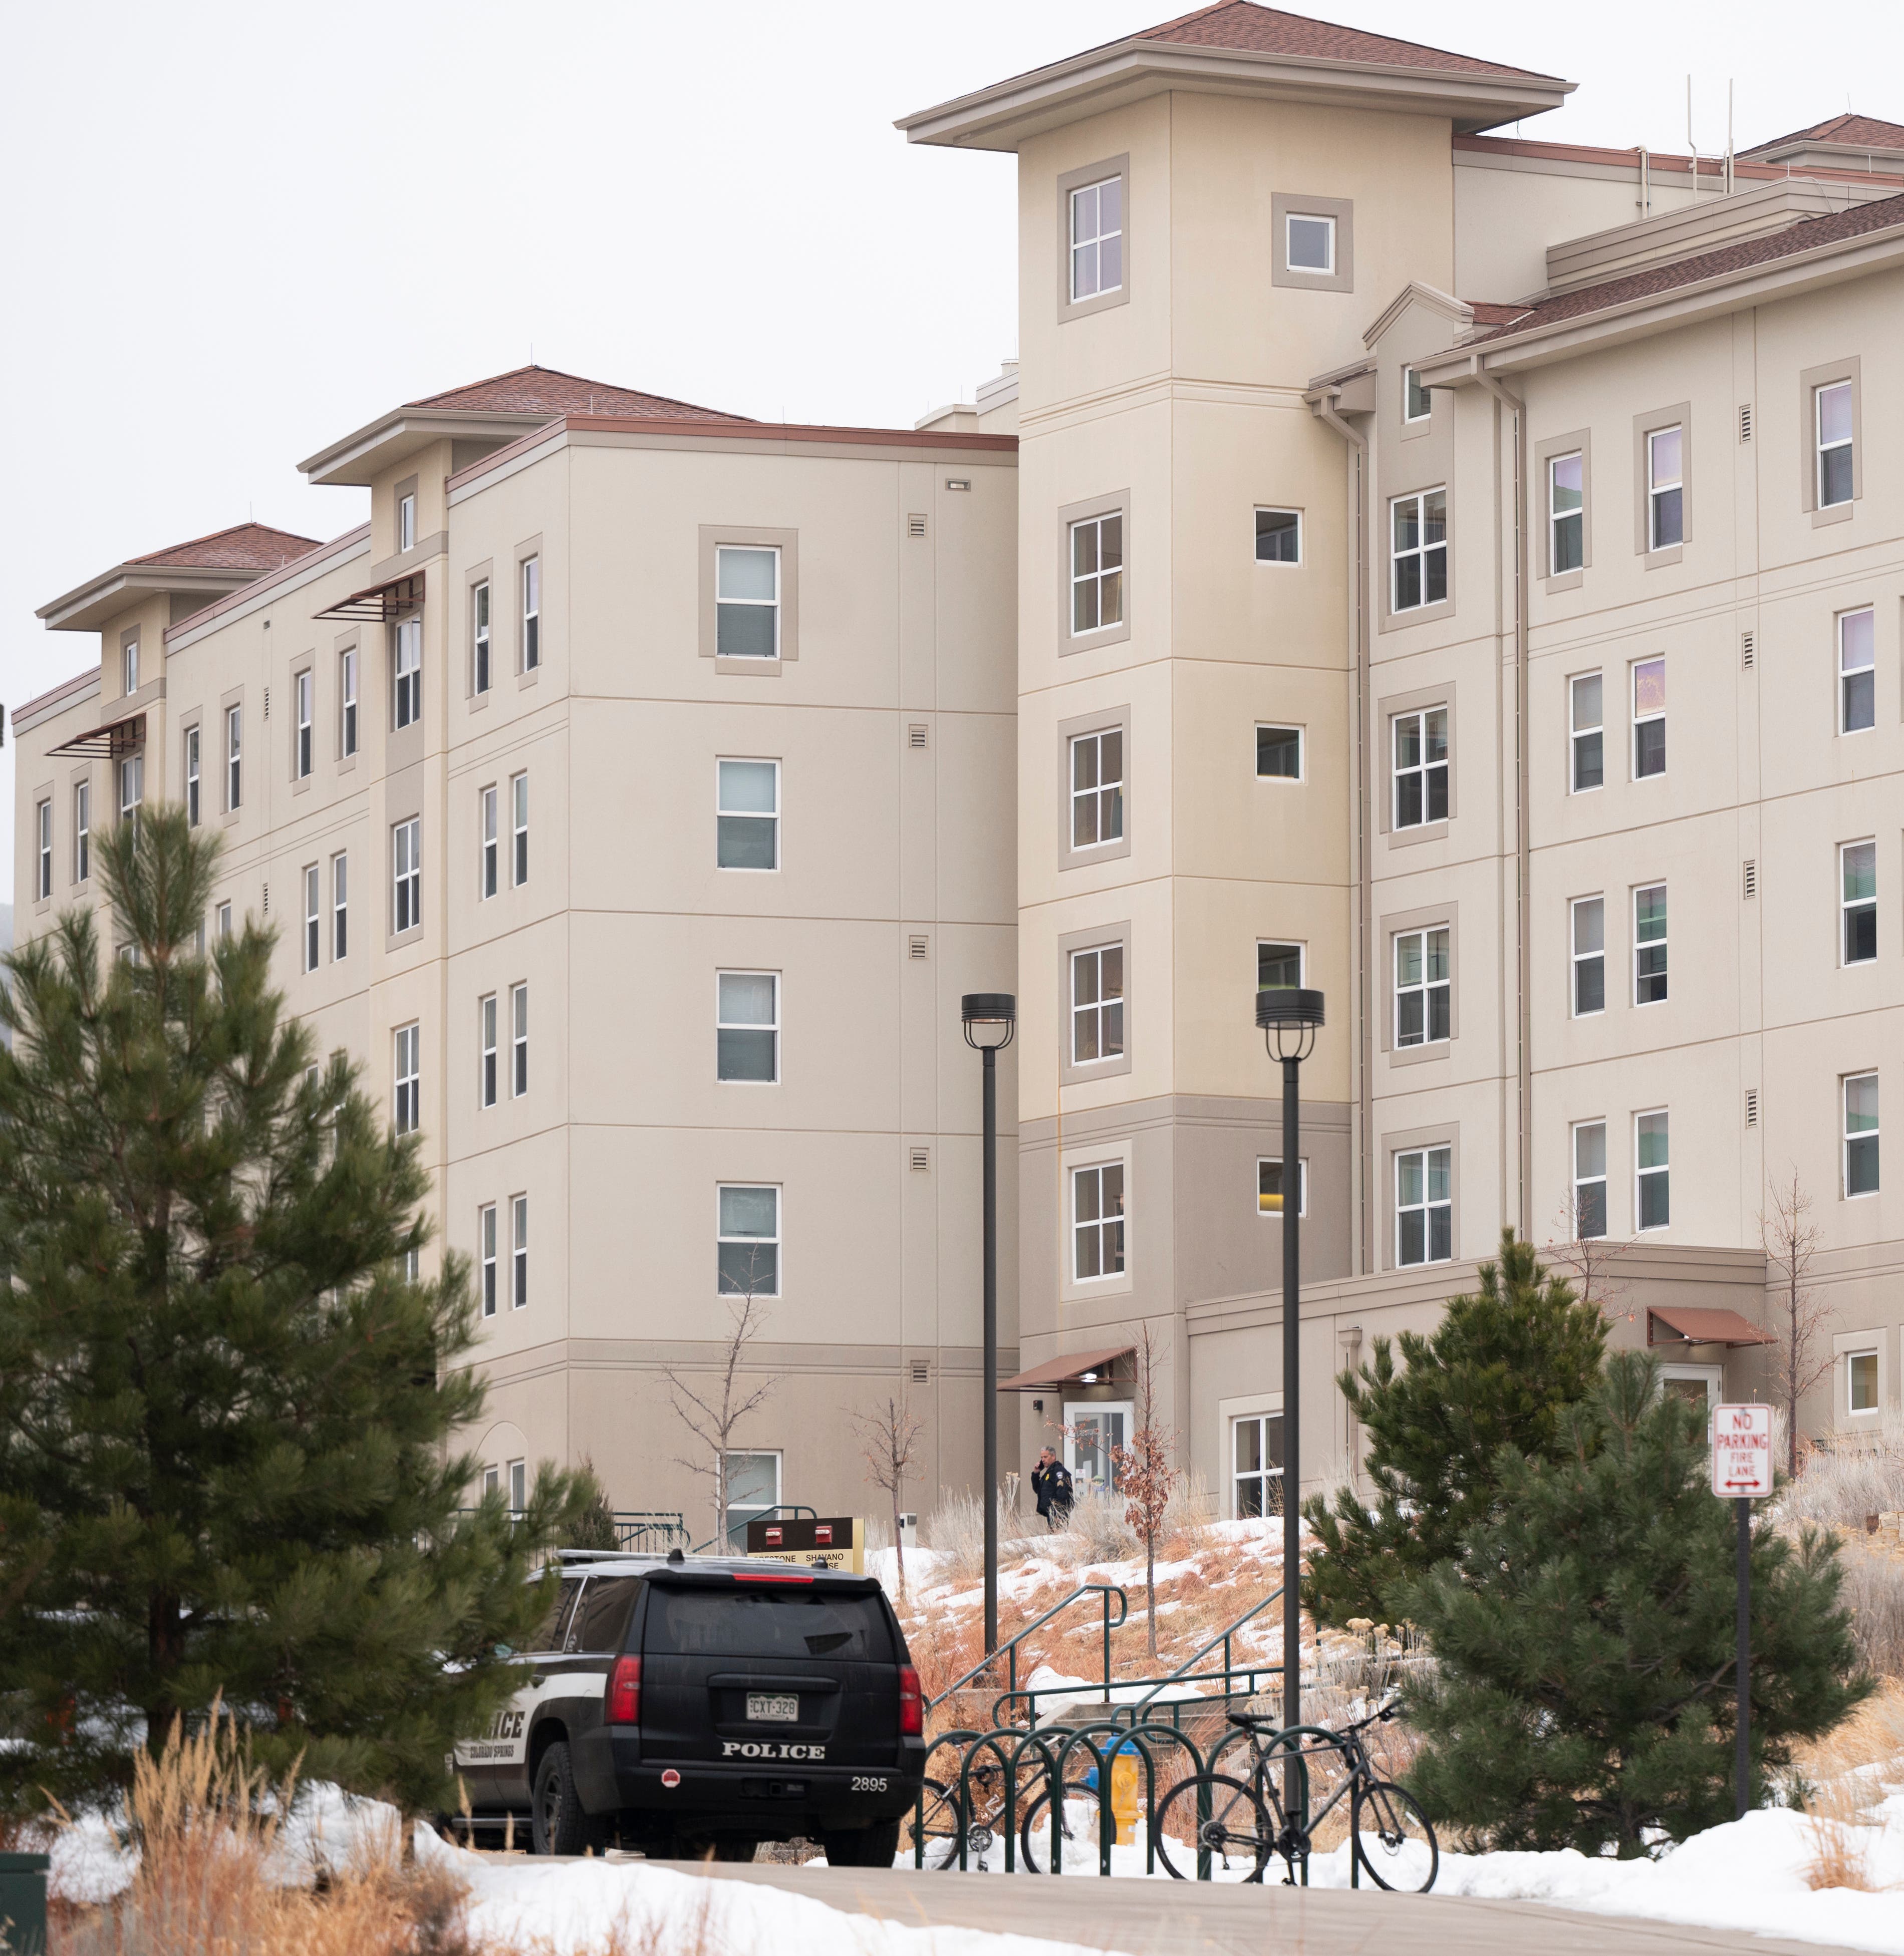 Suspect arrested in Colorado university dorm murders